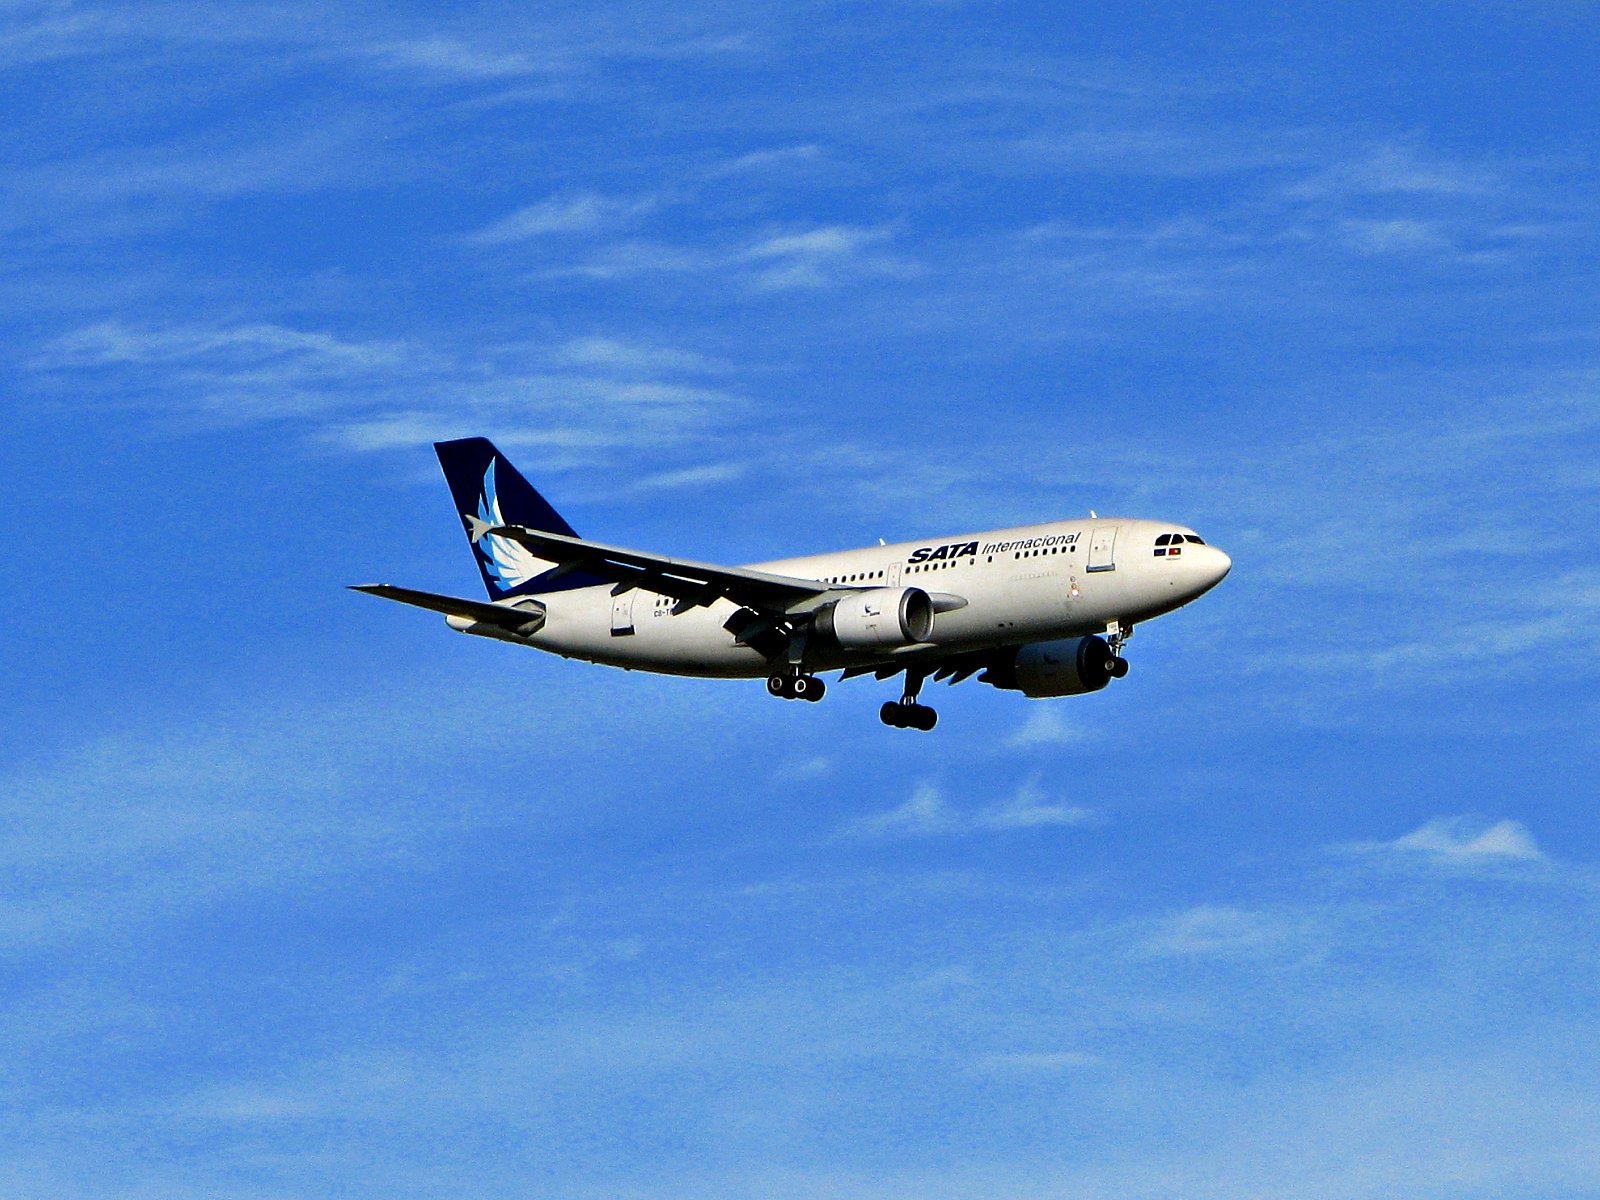 A Sata flight near Toronto in 2010. The airline is attracting interest from investors. Source: Flickr/Michael https://flickr.com/photos/msvg/4691702266/in/photolist-89AcCo-8ZXGeW-bMJLH-2mcgG6y-9ez9vR-cPkPYf-7KnMjs-2aWmPuk-a3TQHs-cPkQuw-GCrxXu-cPkPuY-21eeDo1-8P3eyy-qhqsVh-2mKTytu-dtMERC-584Azj-ZcefUA-21eeEcL-ZceeQb-Zcedkh-GkrZWX-21cdrZN-8P3bd3-91vQra-2mcmyaV-2mcgKx3-2mFJmbQ-8NYZvn-82bbiT